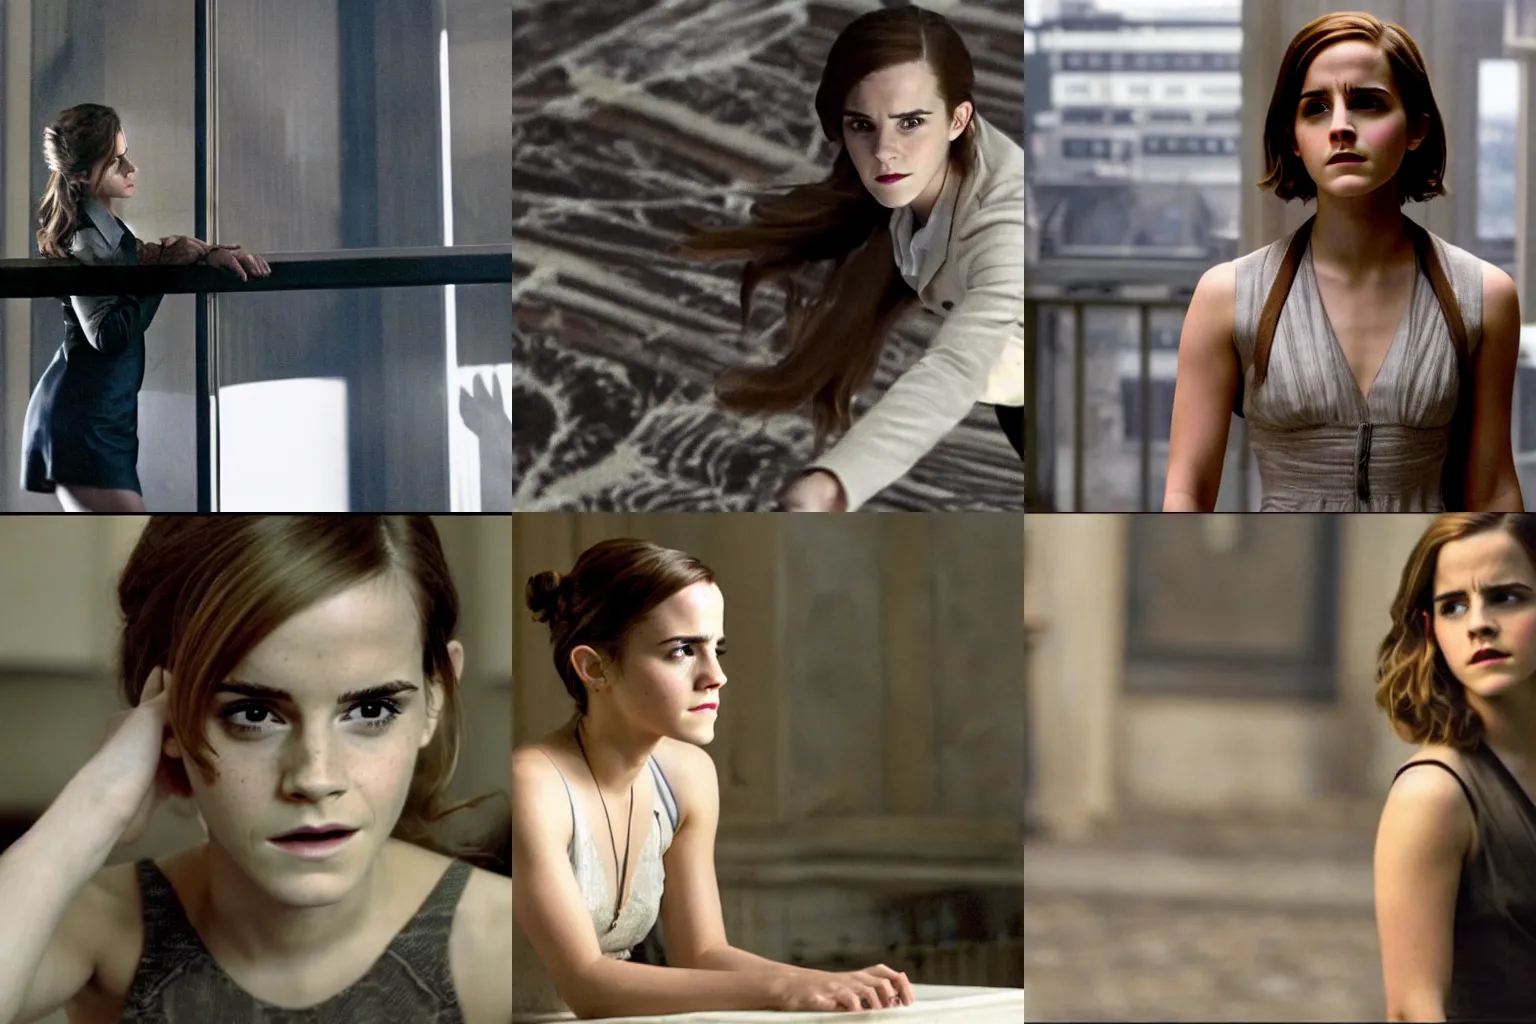 Prompt: Movie still of Emma Watson in Inception in a dreamscape